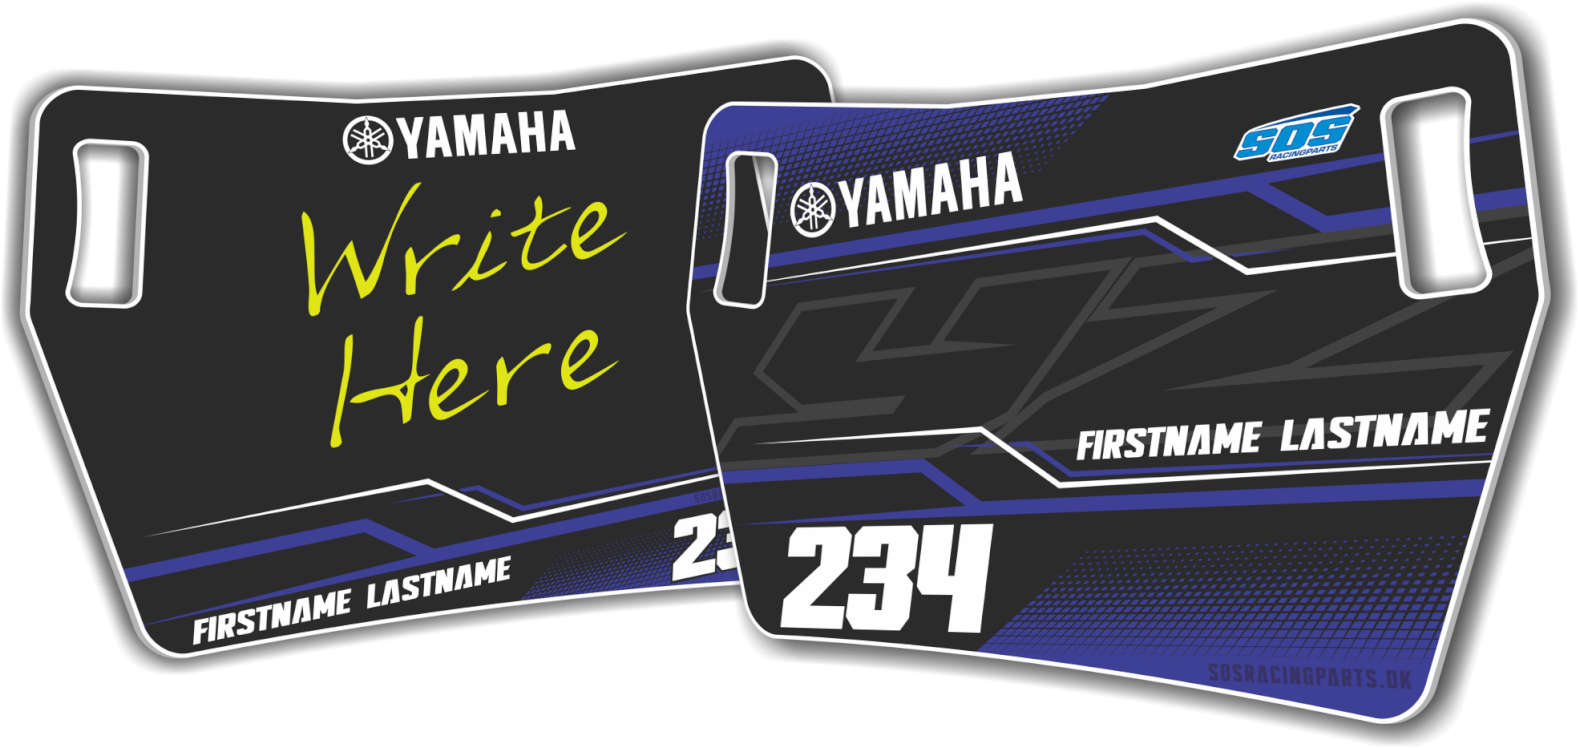 Race 5 Yamaha Pitboard